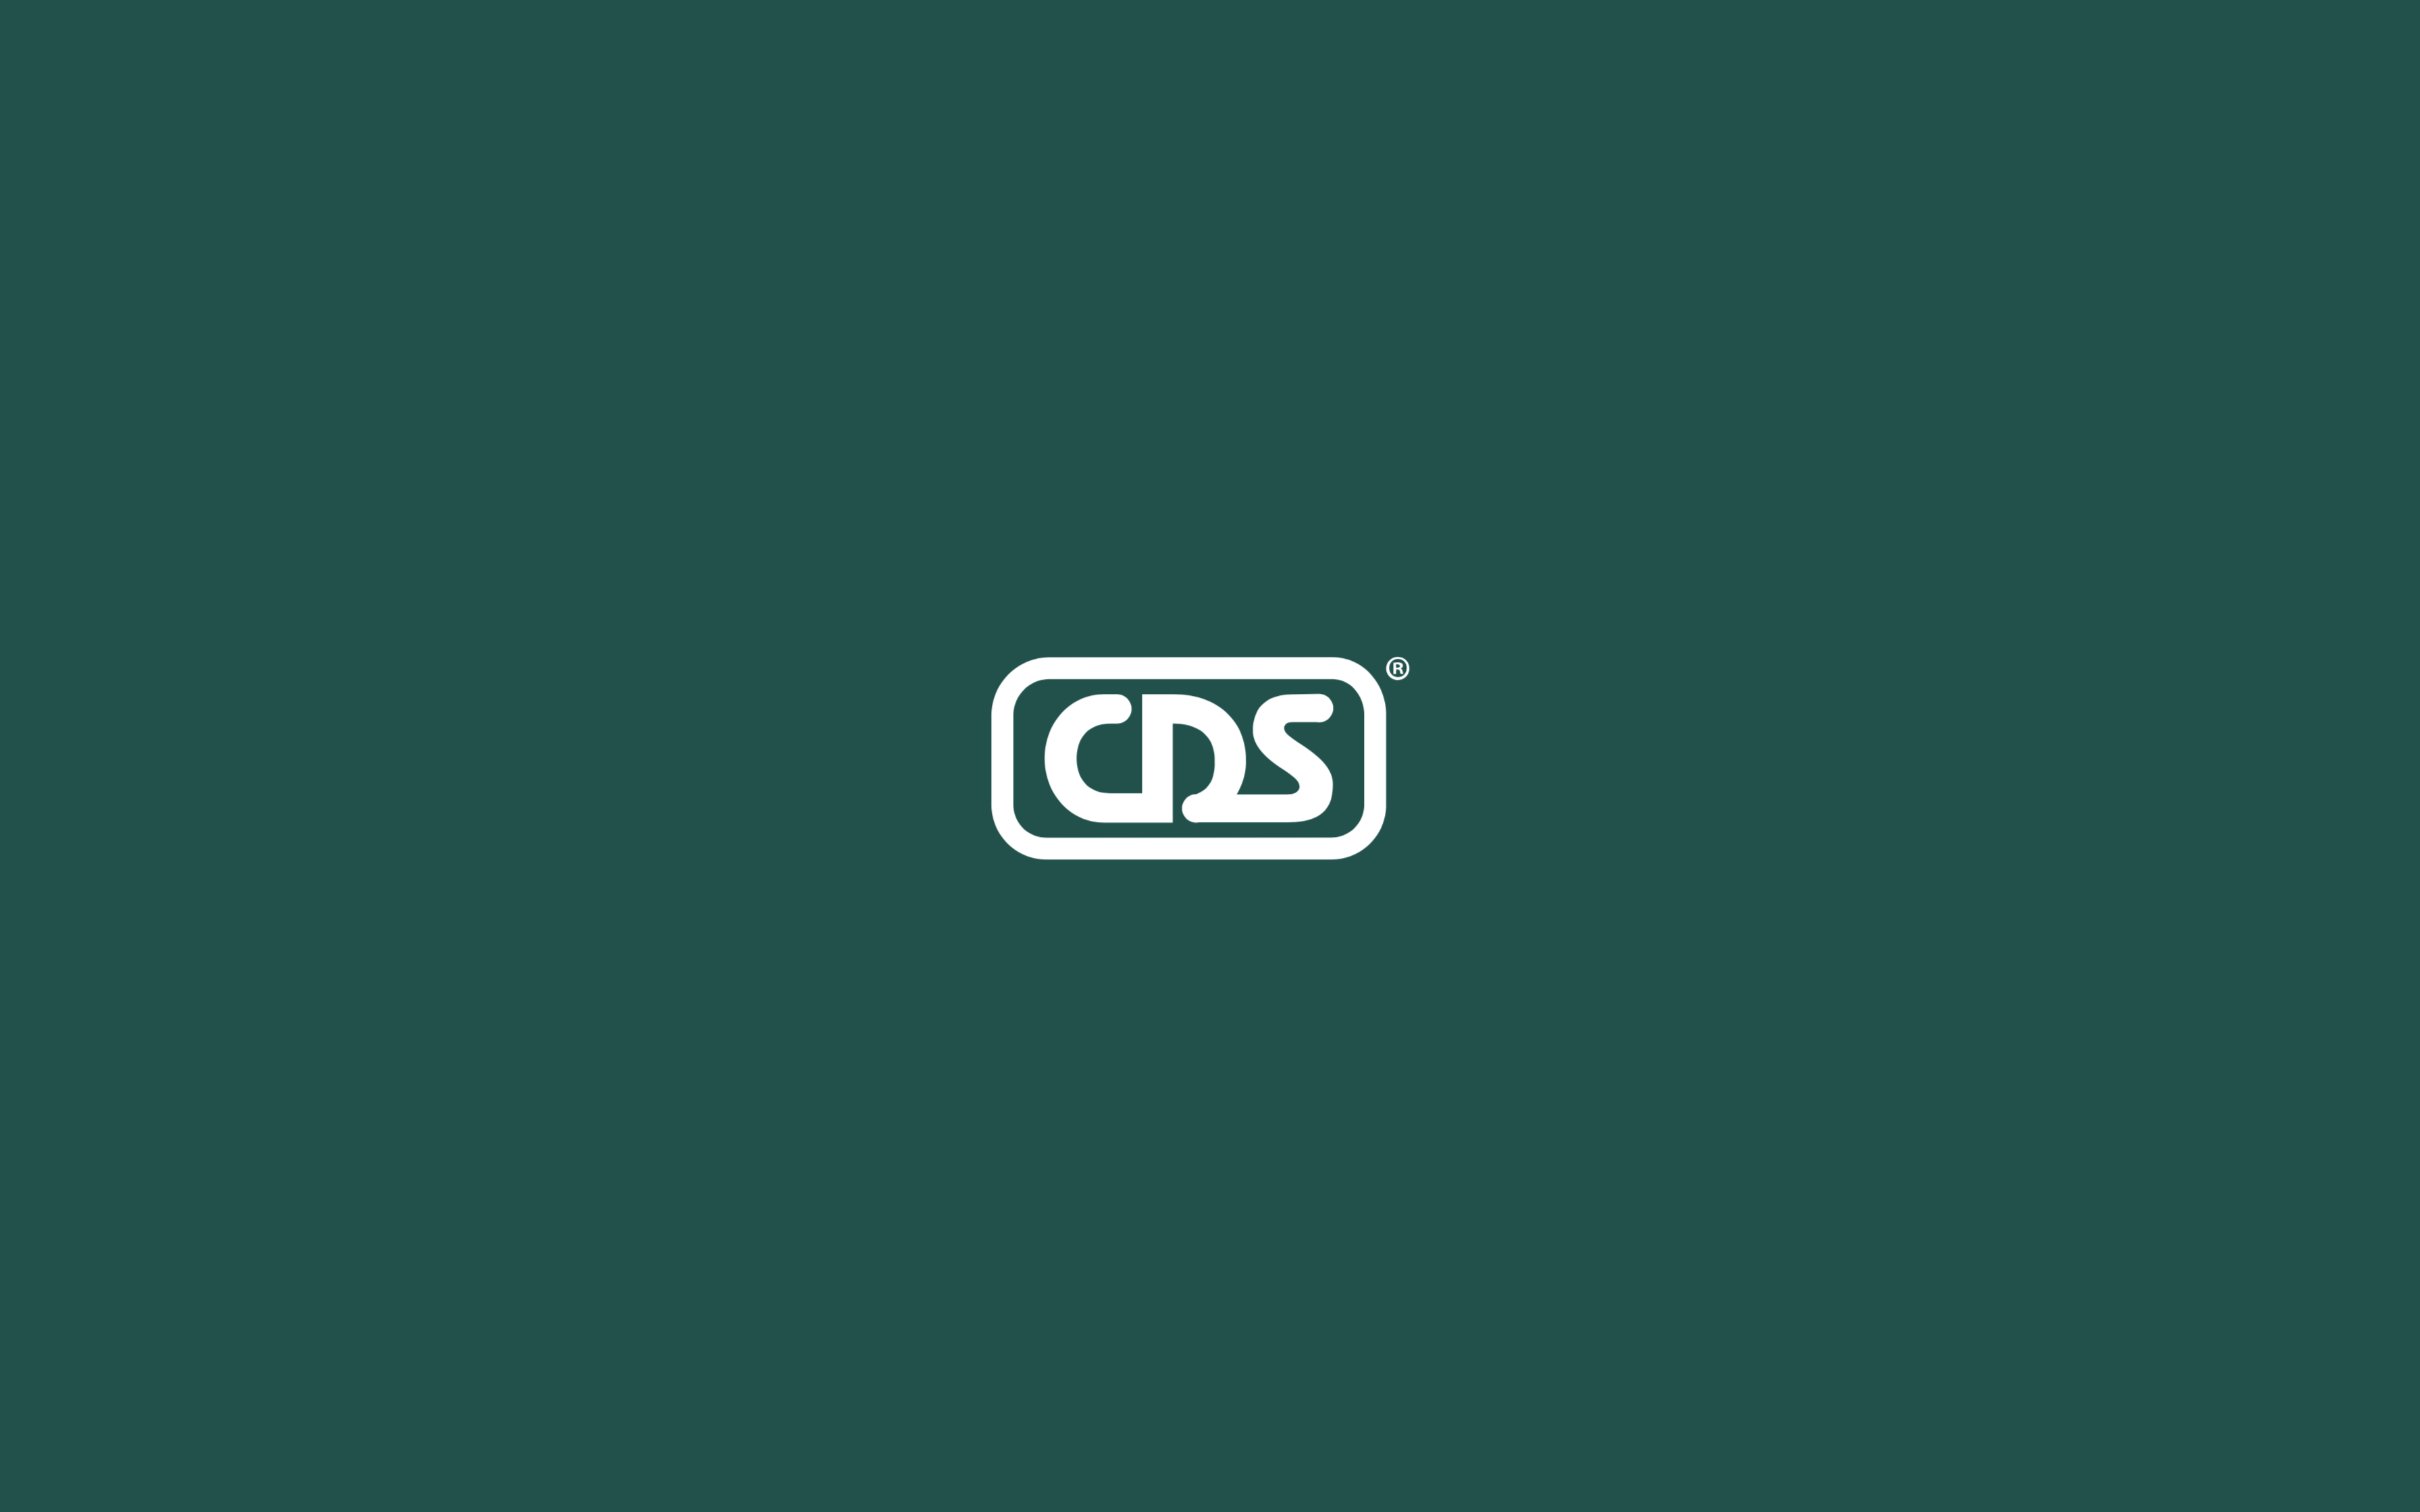 CD Logo PNG Transparent & SVG Vector - Freebie Supply